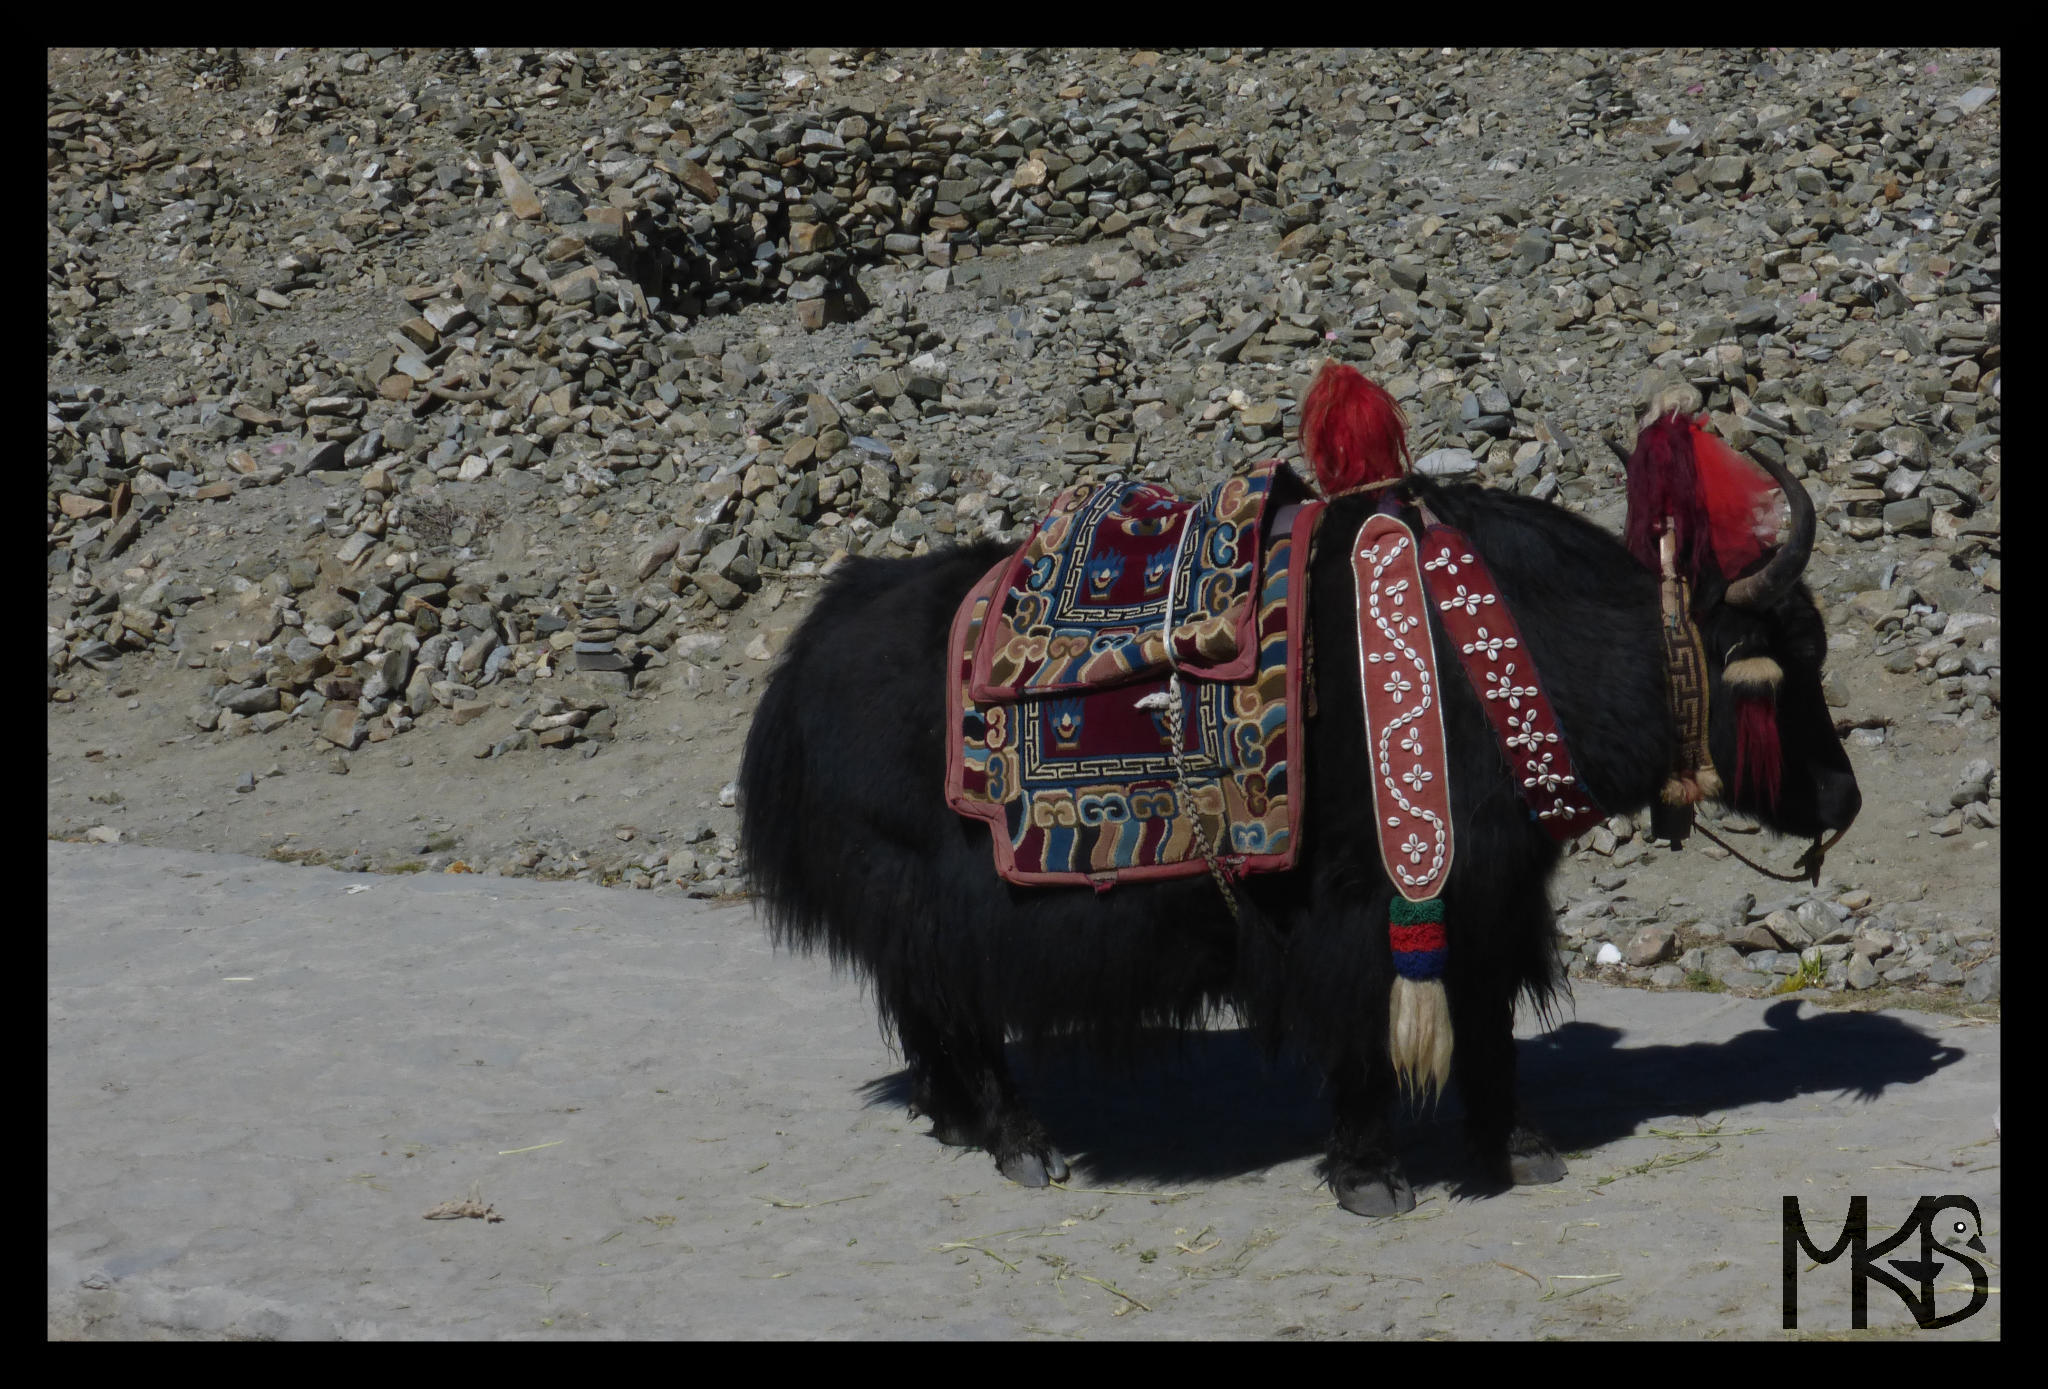 Yak, Tibet